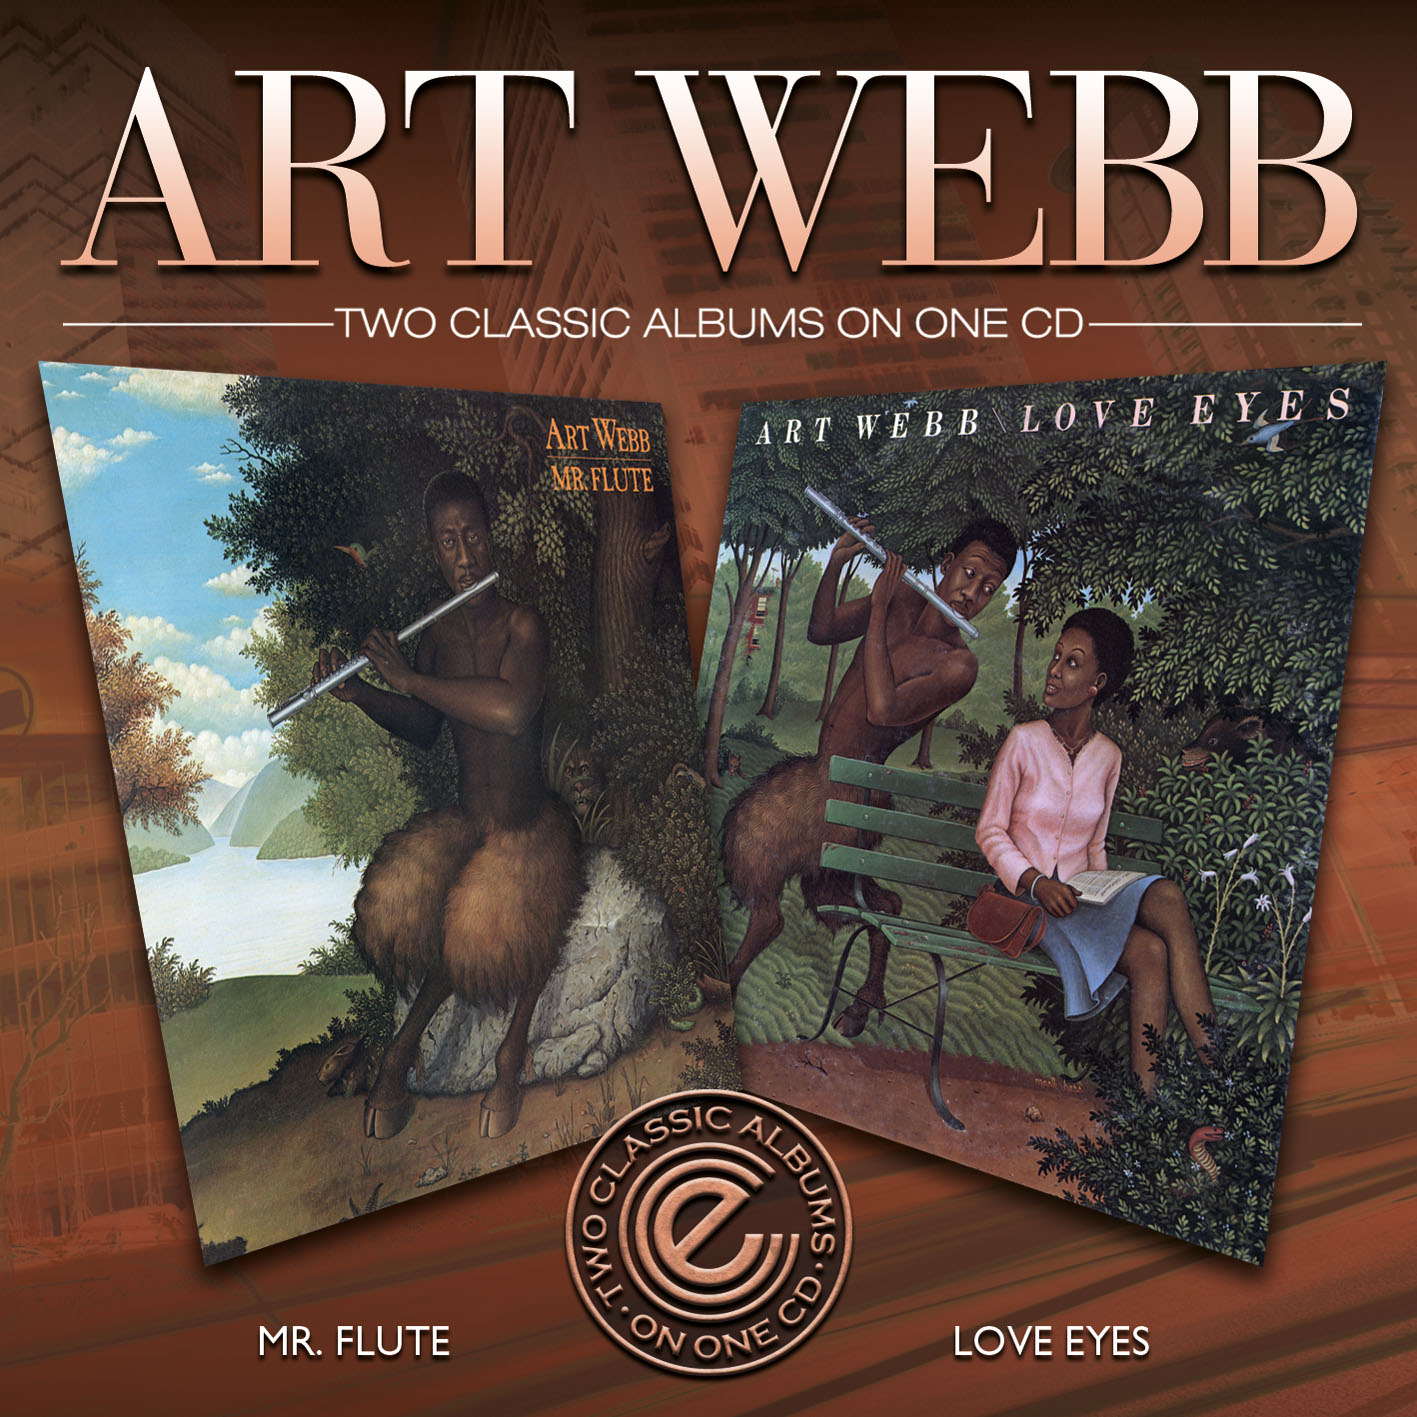 Art Webb/MR FLUTE & LOVE EYES CD